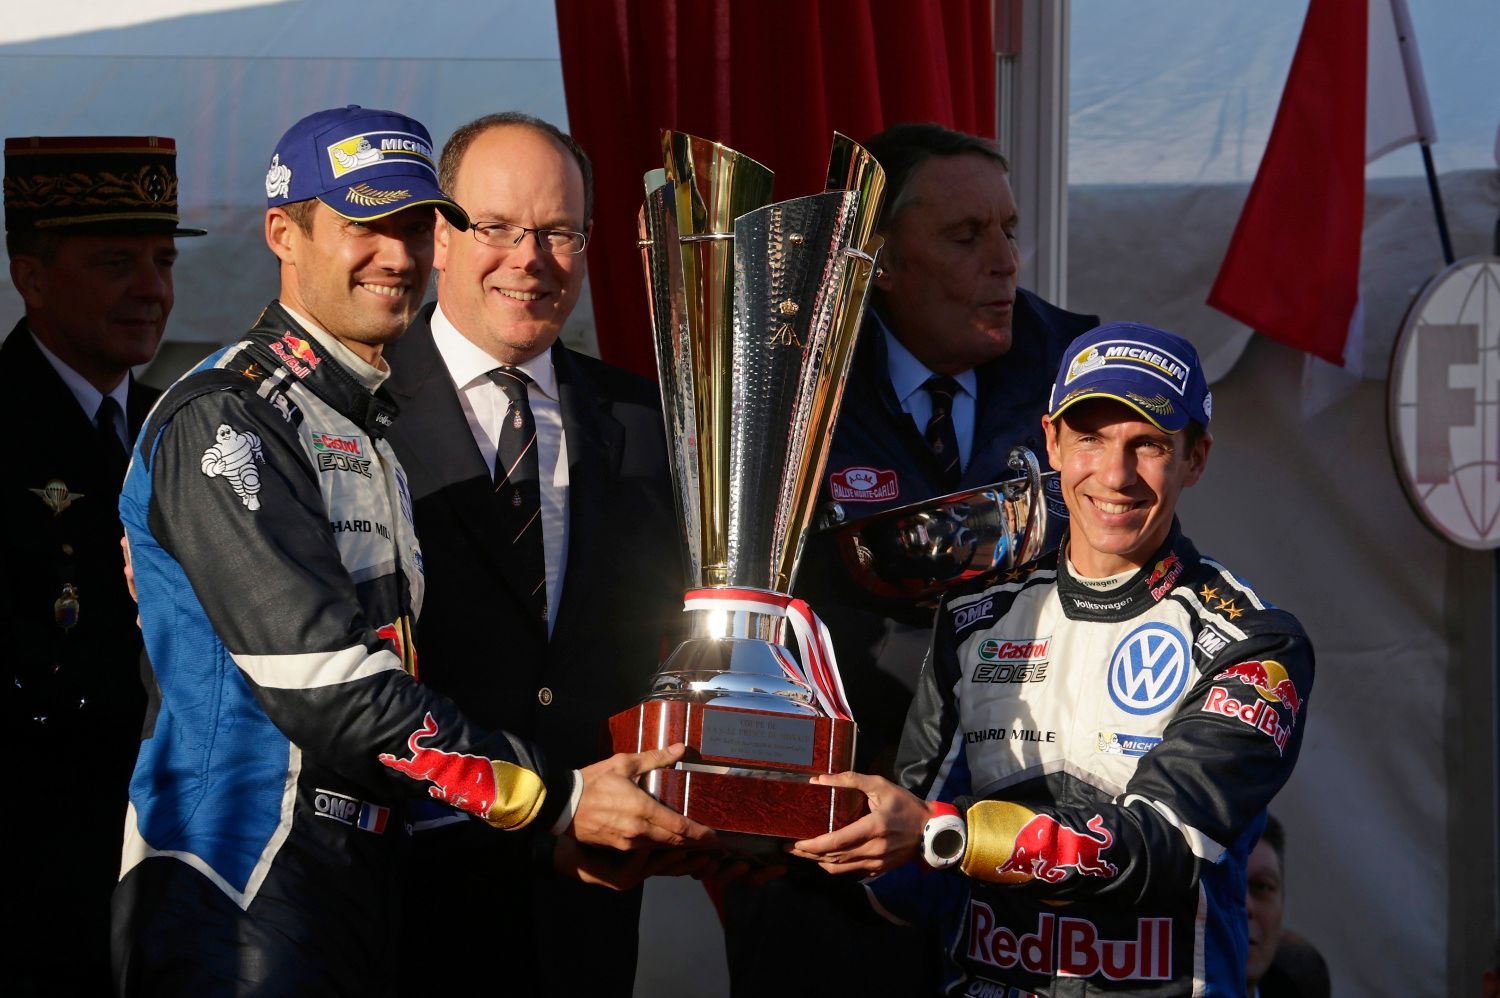 Rallye Monte Carlo 2016: Sébastien Ogier, Volkswagen Polo R WRC